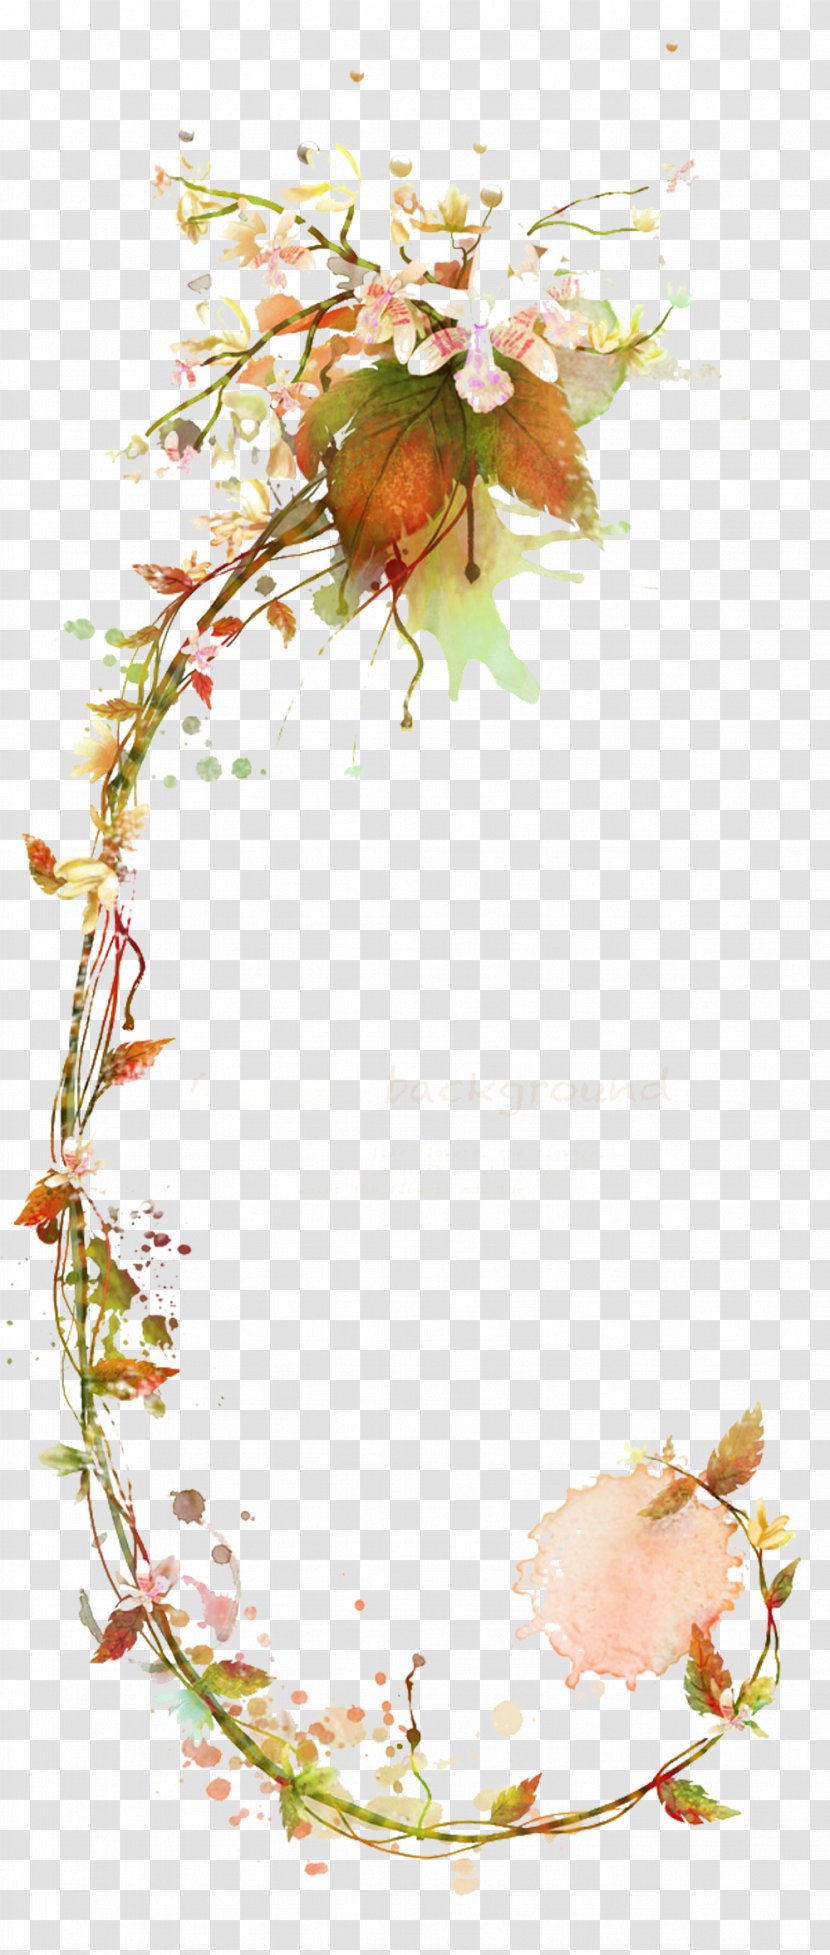 Flower Vine Illustration - Arranging - Pear Tree Branch Picture Material Transparent PNG